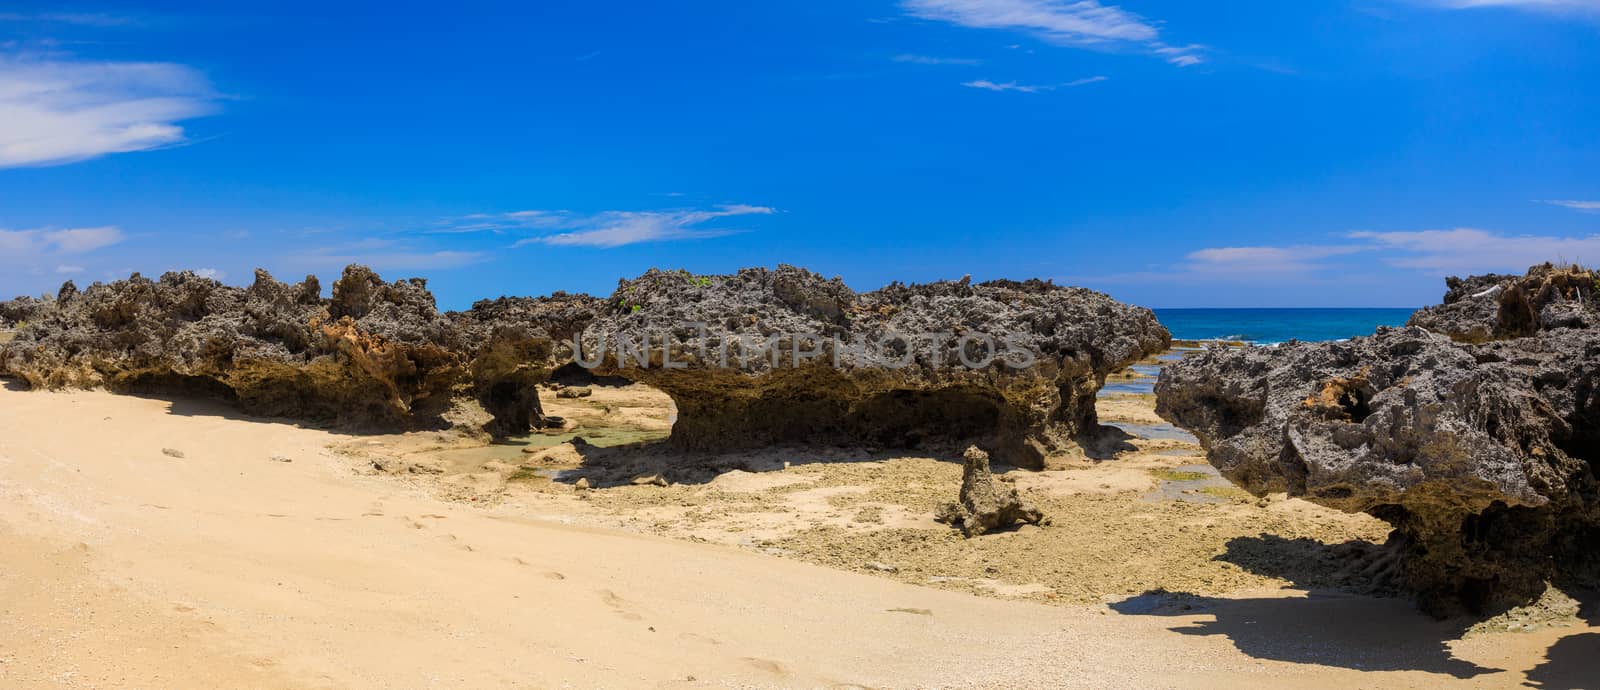 beach in Madagascar, Antsiranana, Diego Suarez by artush